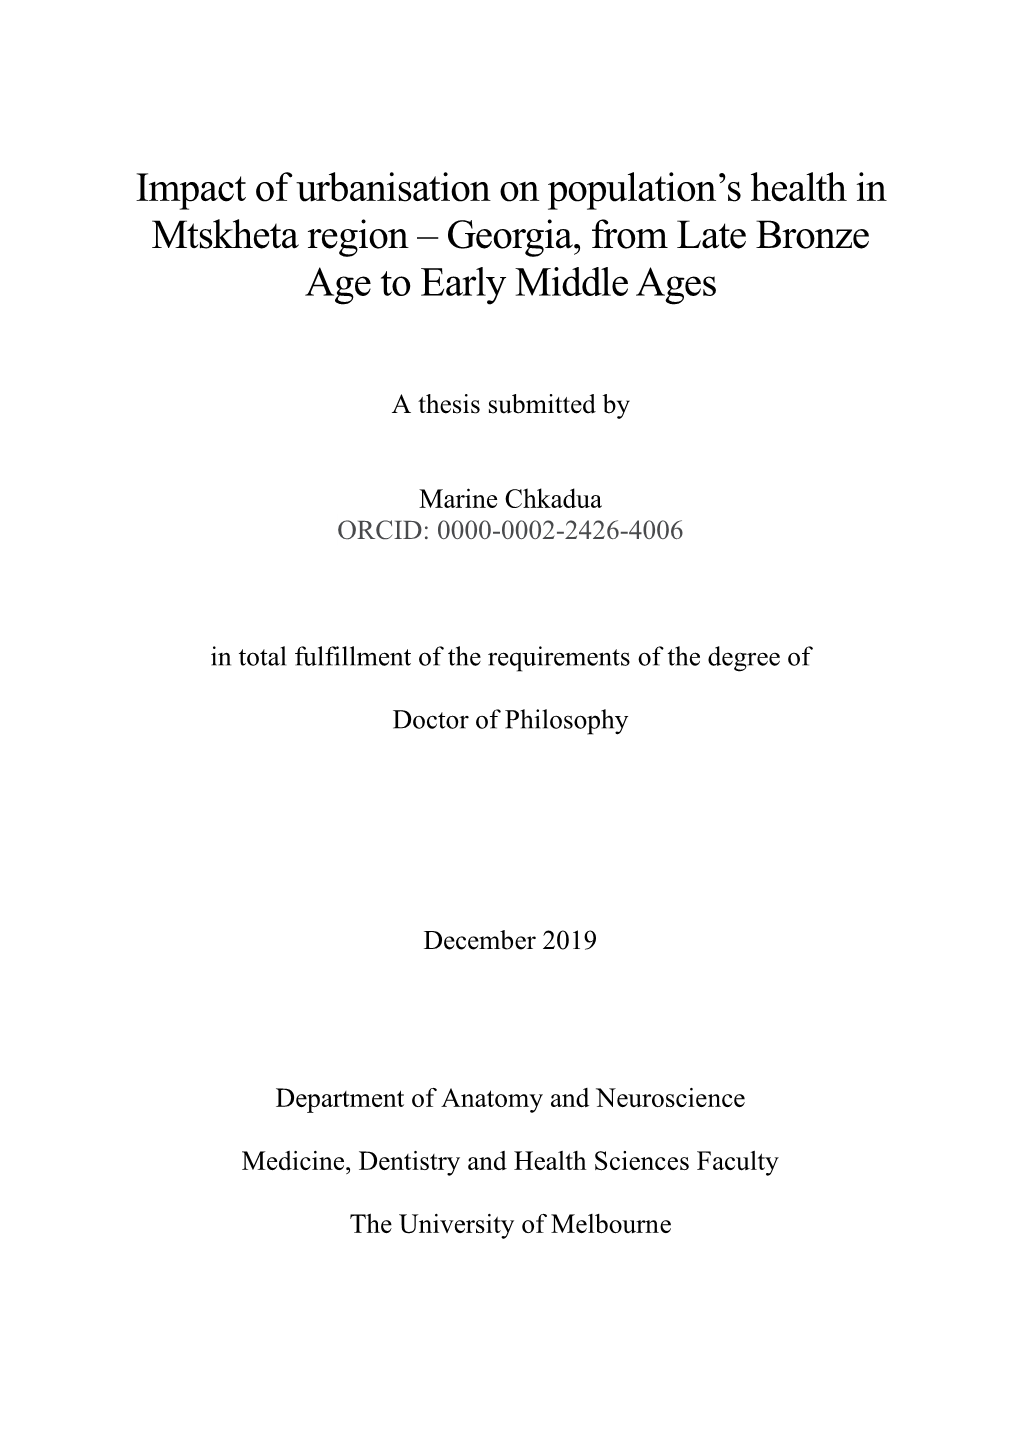 Impact of Urbanisation on Population's Health in Mtskheta Region – Georgia